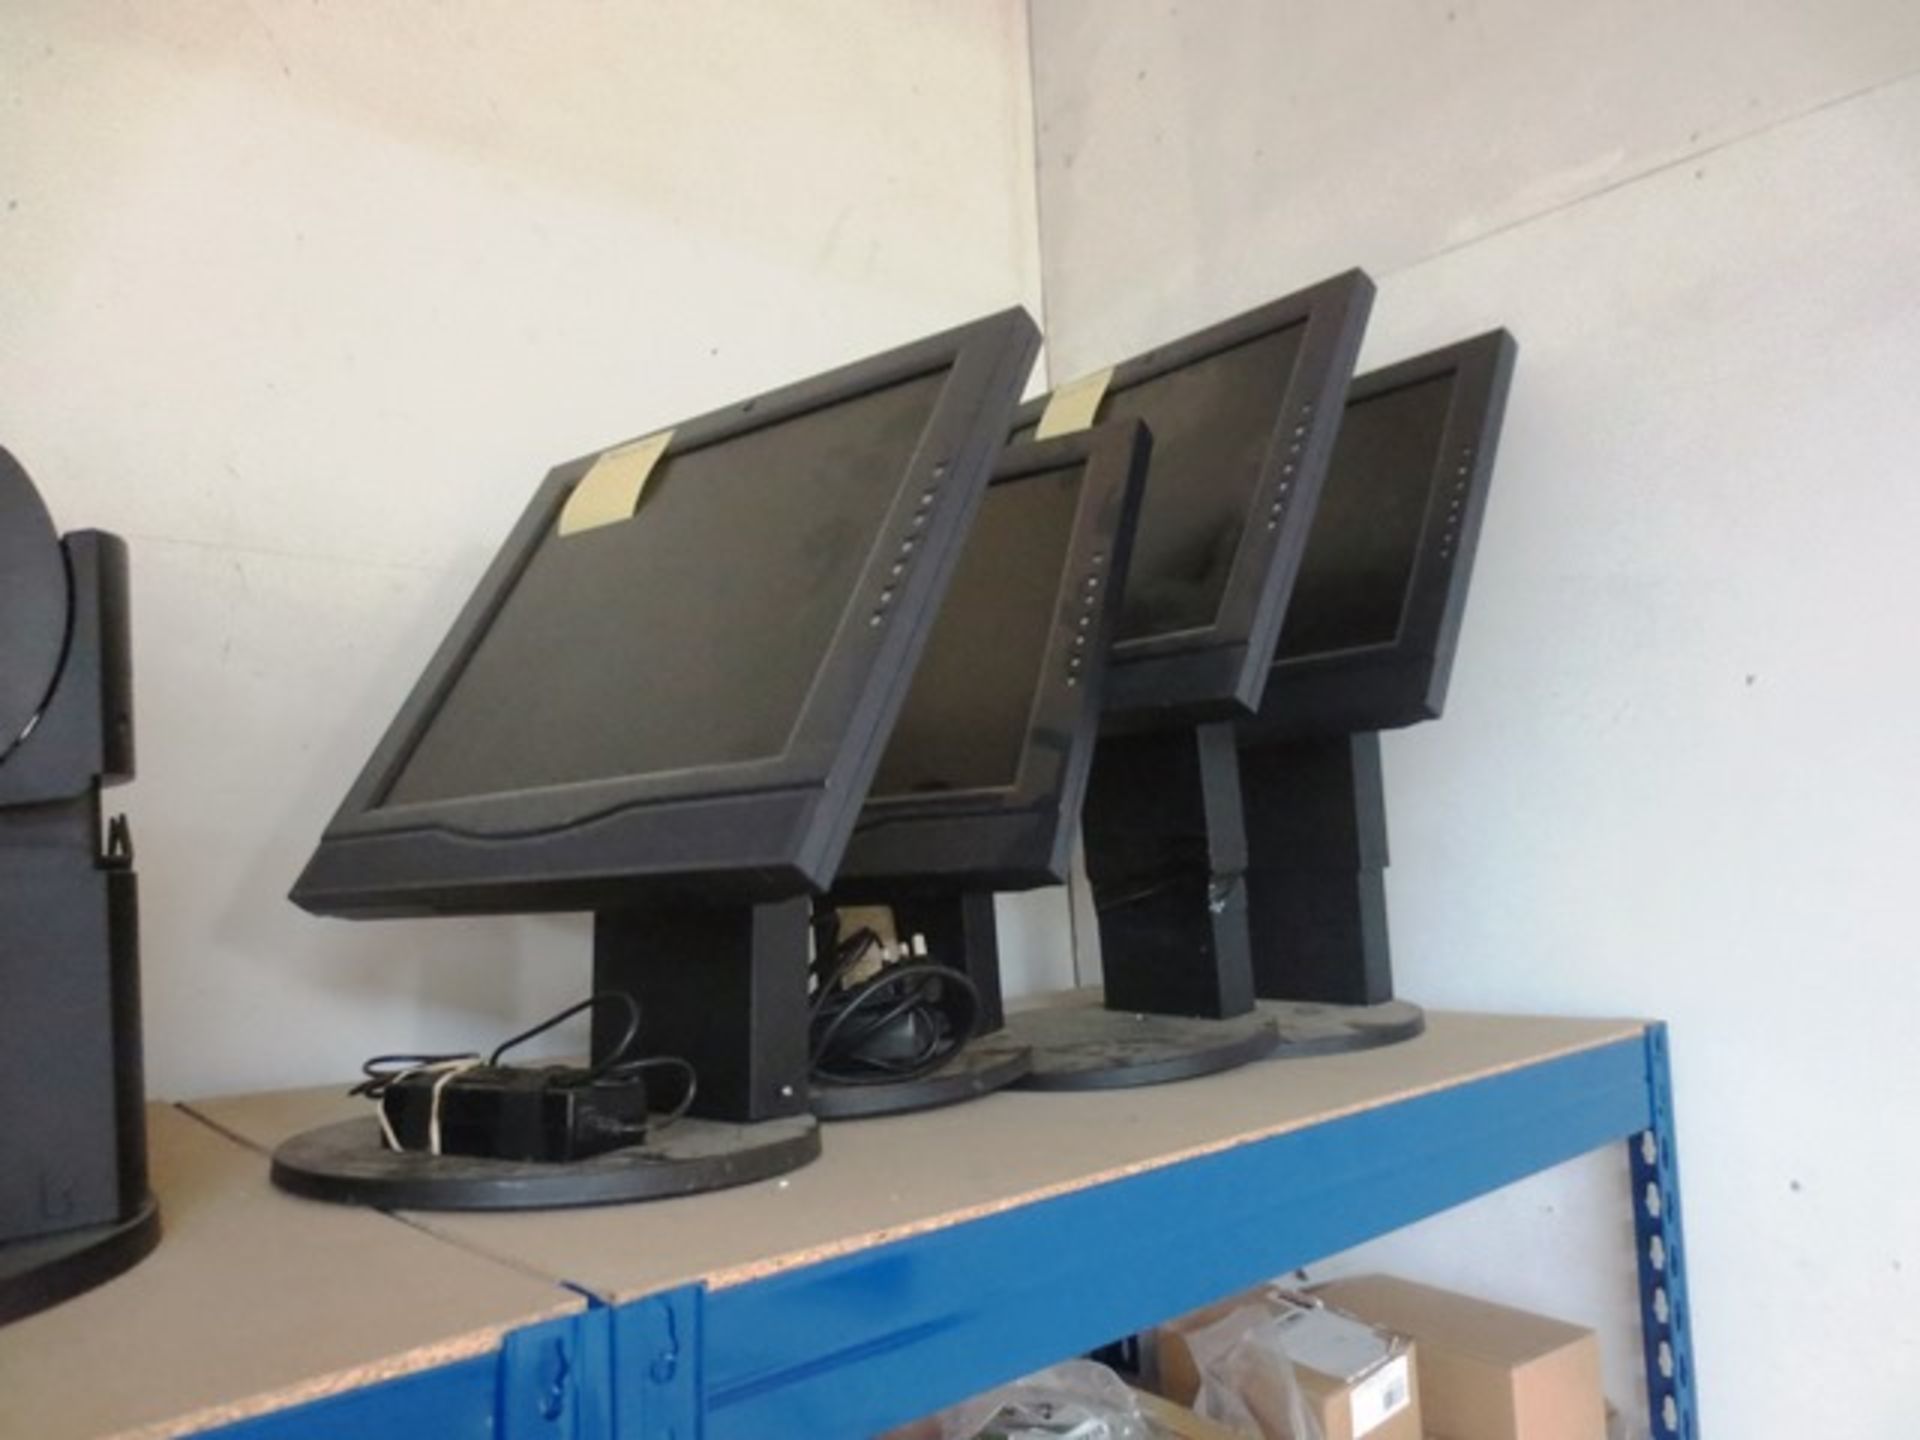 Four various flat screen LCD monitors